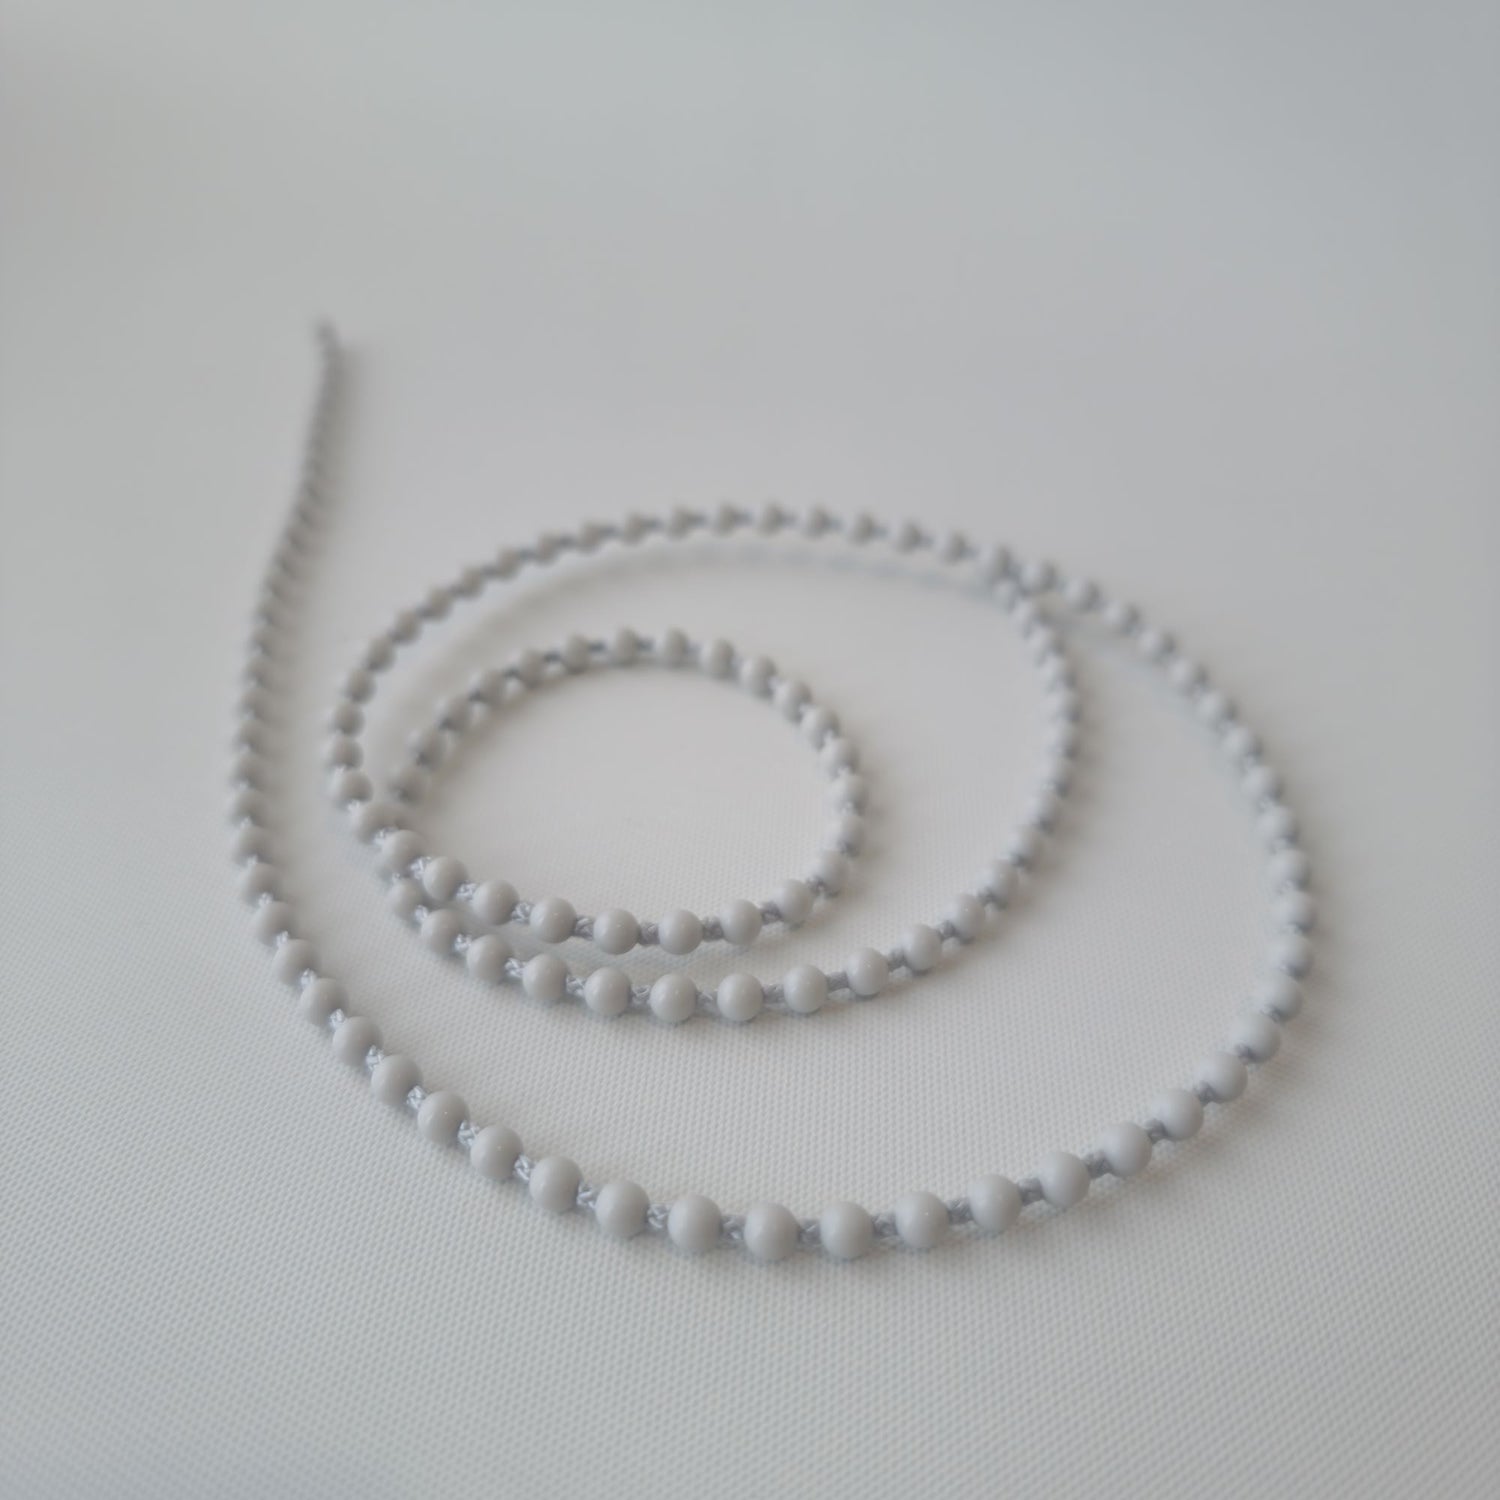 Roller Blind plastic chain - 10 metres - grey